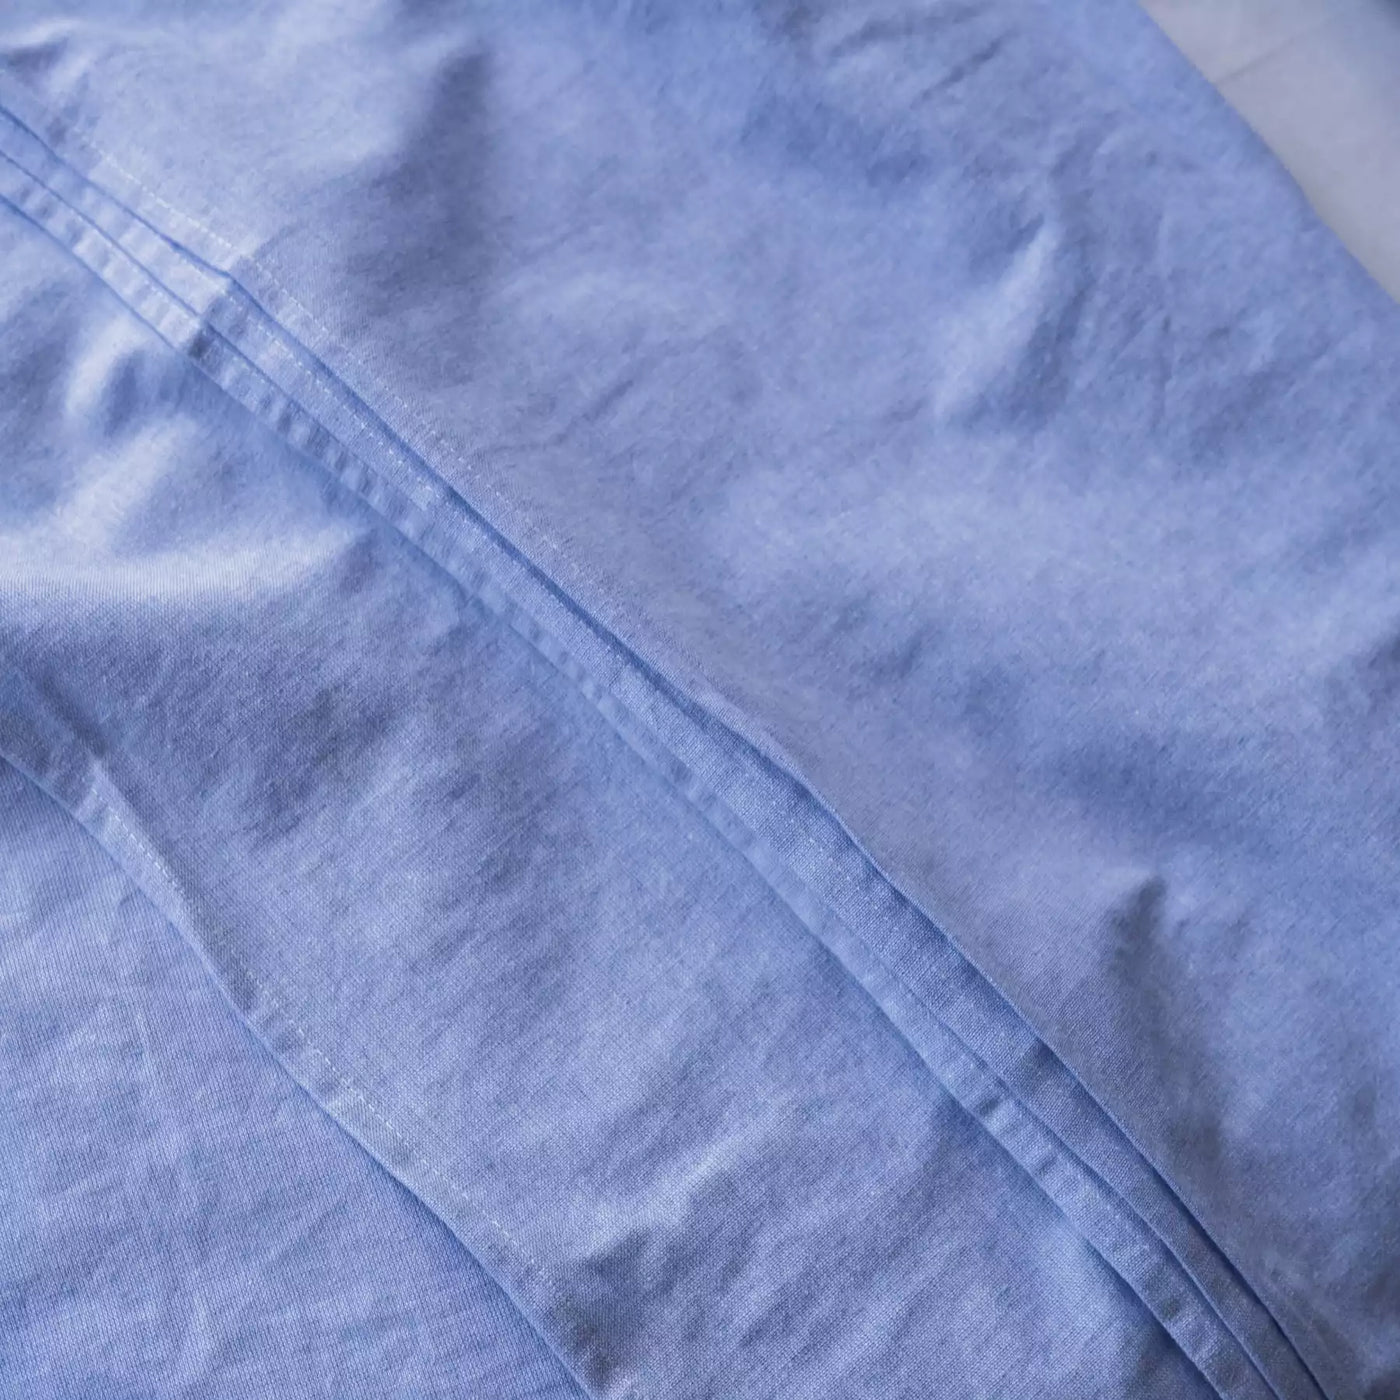 Linen & Cotton Bedding set with Flat sheet 190x270 in Blue melange